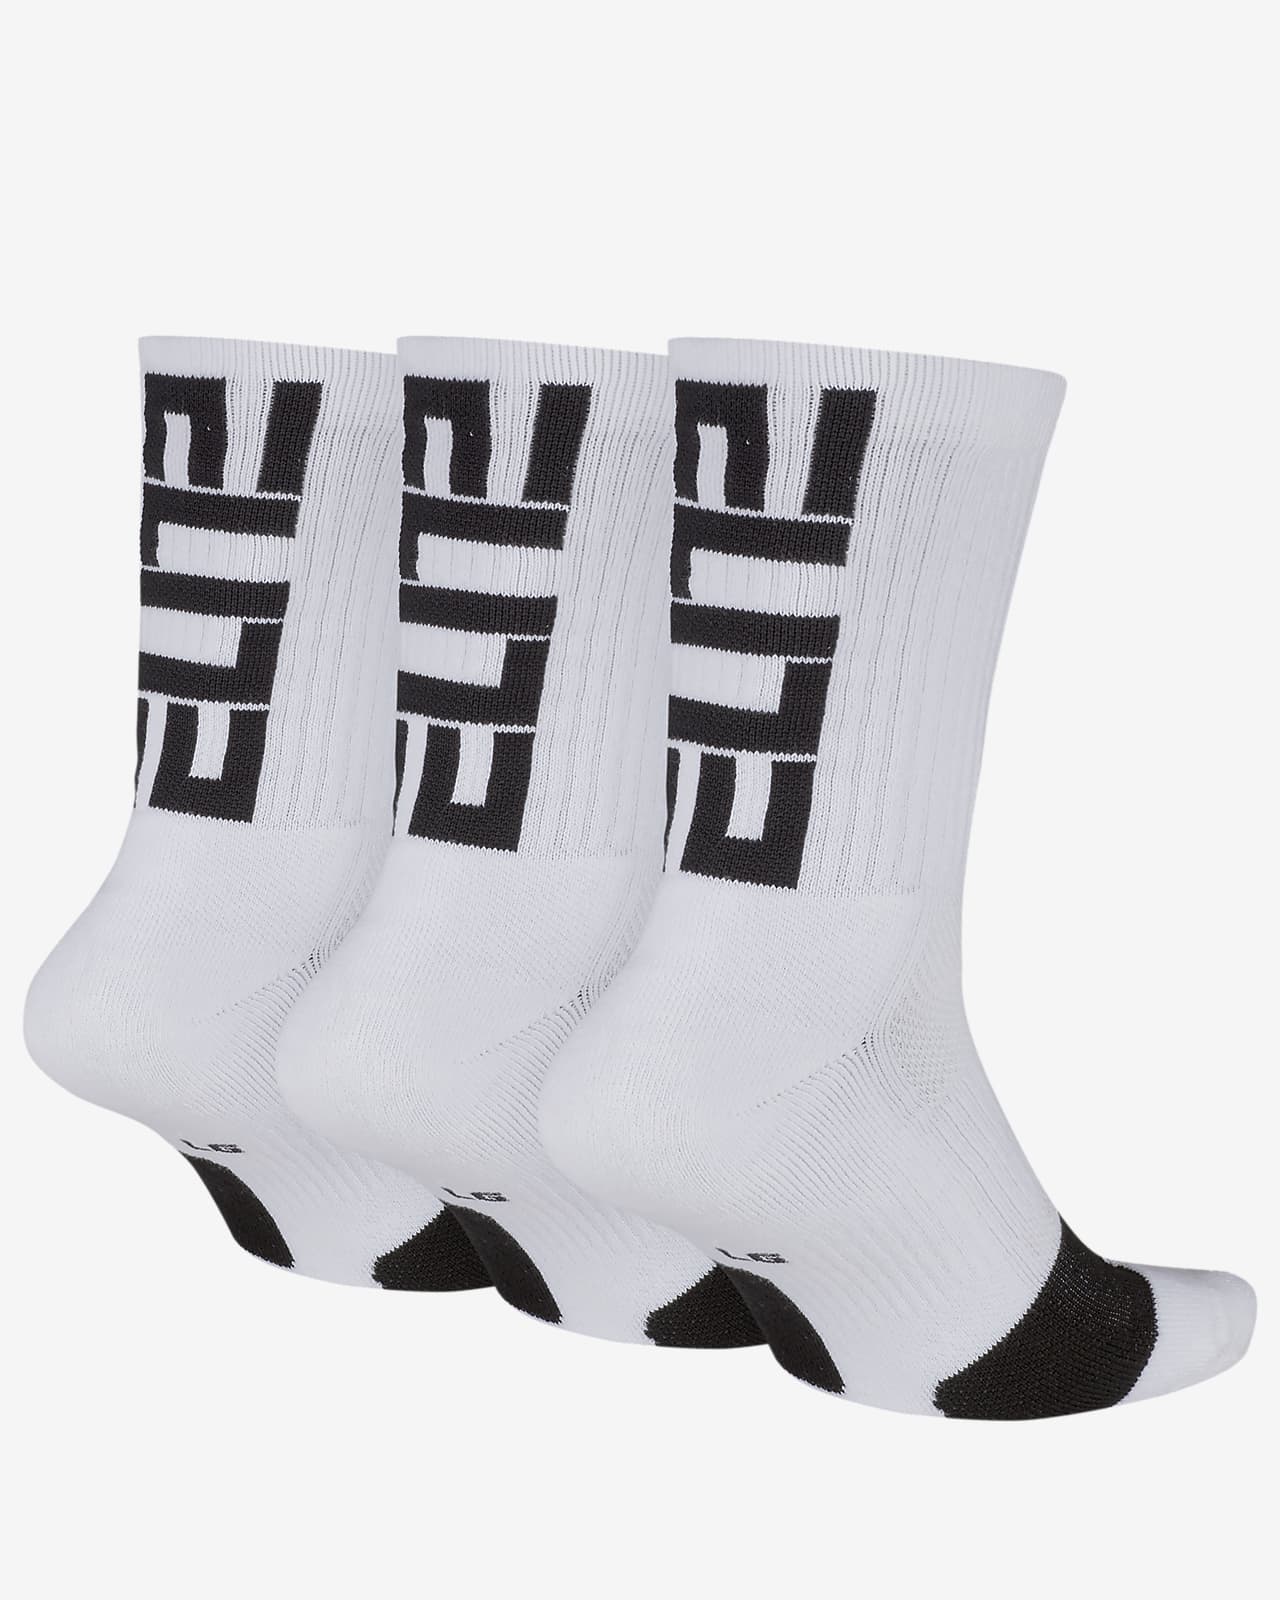 nike elite basketball ankle socks,Cheap,Sell,OFF 66%,wellcomwin.it